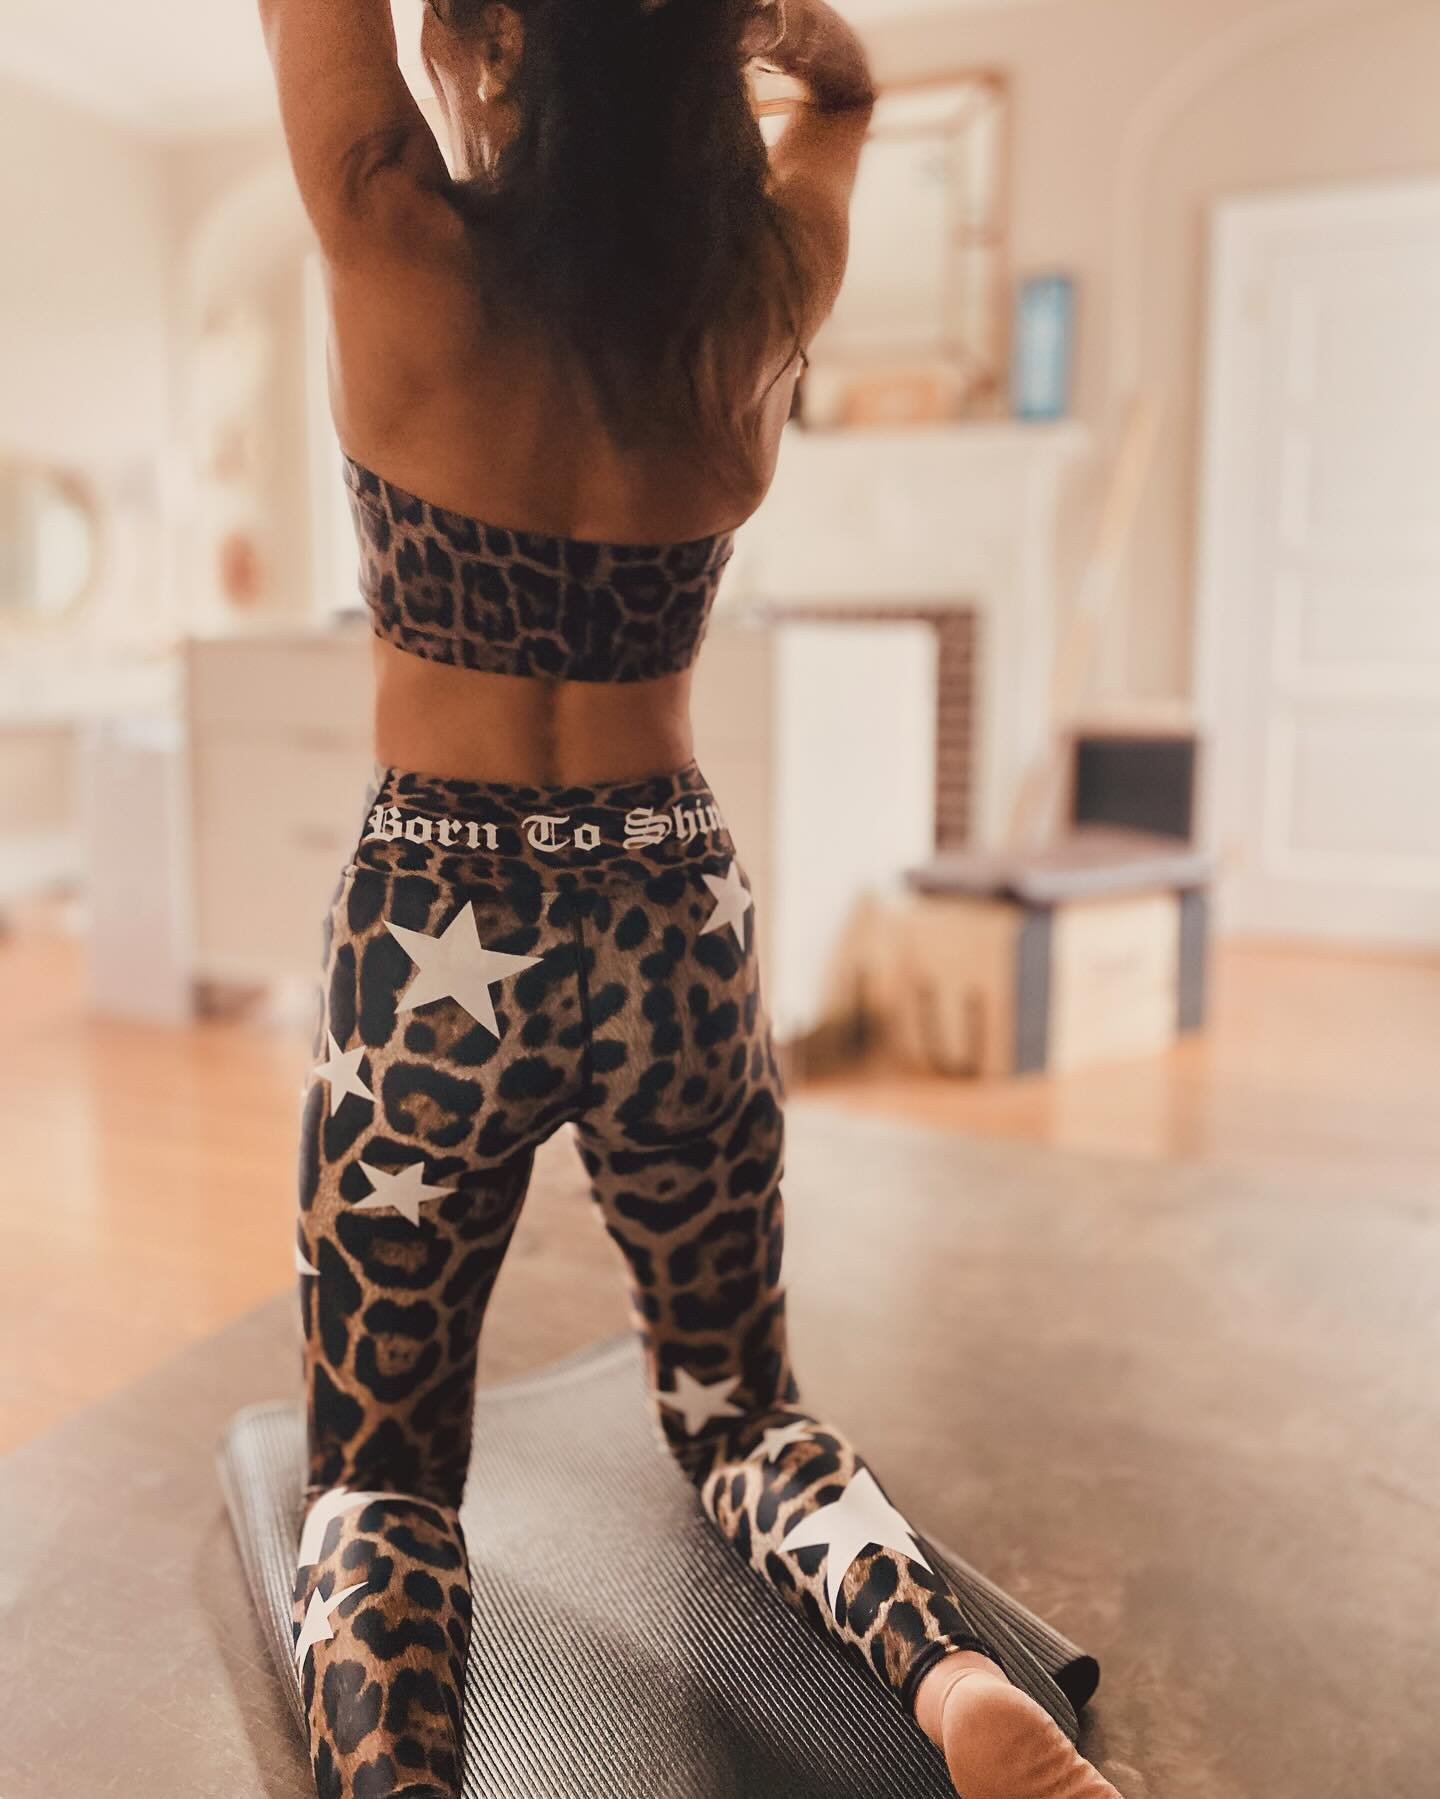 Leopard on Leopard @fortheloveofrockstars #leopardonleopard #inspiration #leopard #leopardleggings #fitnesslife #activestyle #activesoul #leggings #leggingstolove #philadelphia #ootd #unstagood #mobwifeaesthetic #mobwifestyle #stars #borntoshine